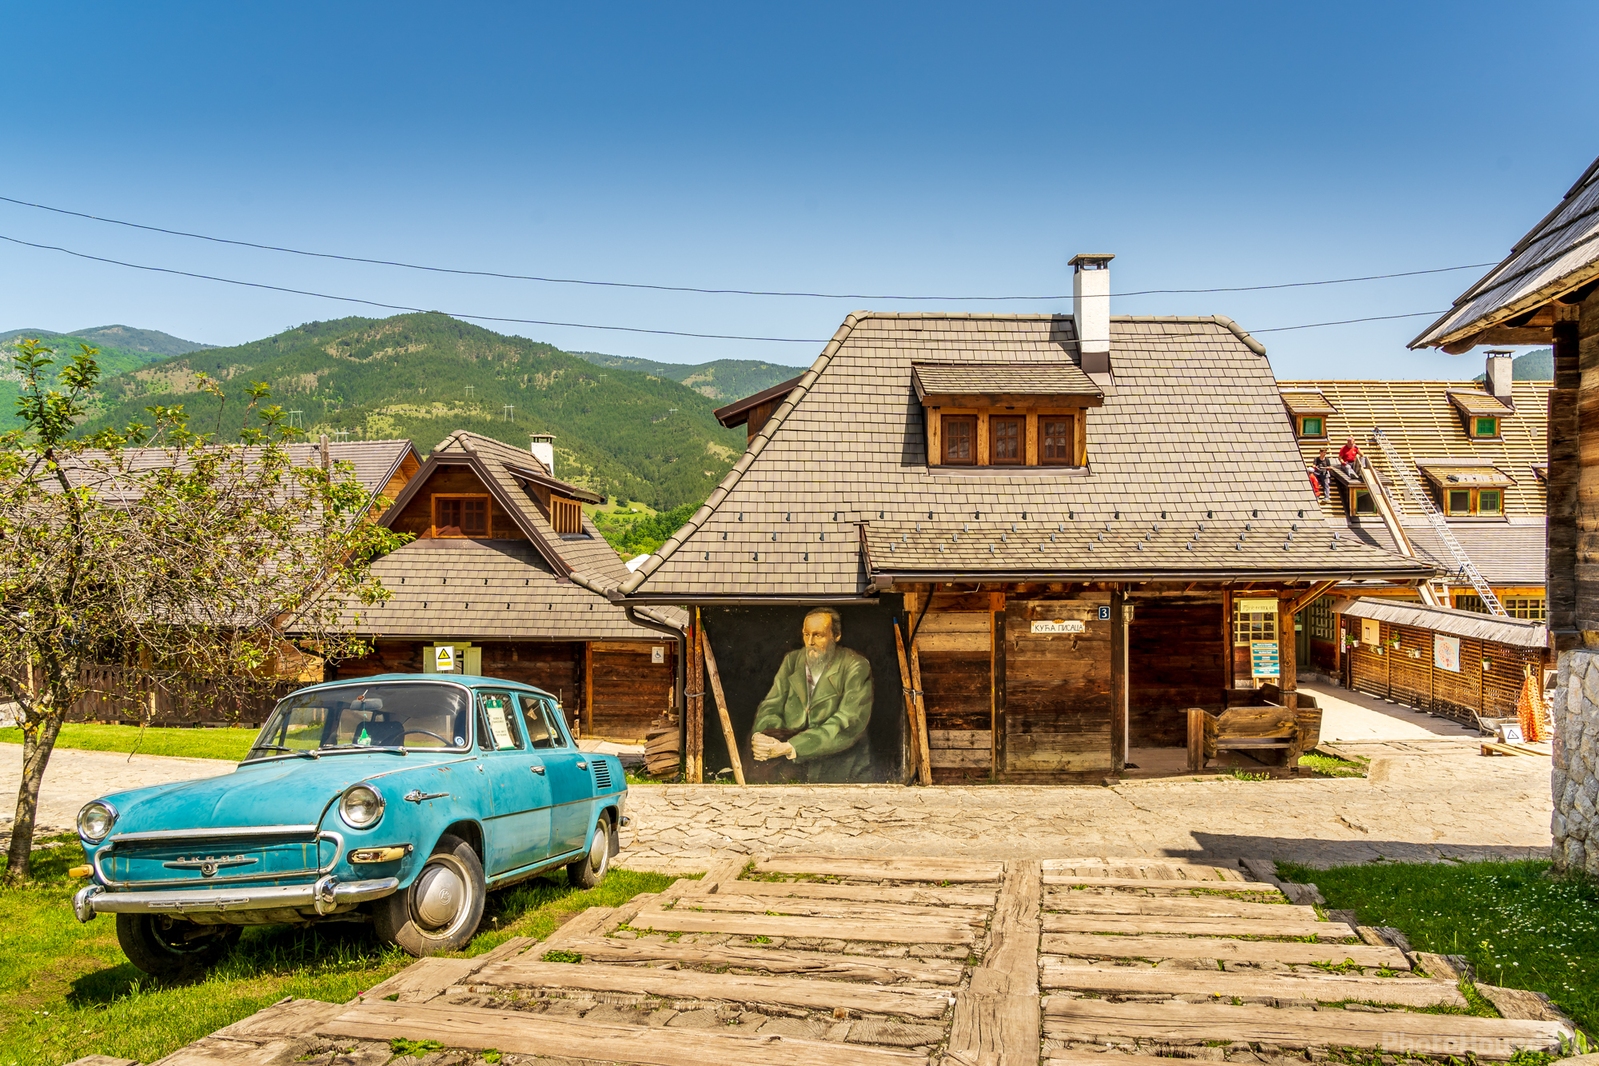 Image of Drvengrad (Wooden Town) by Ilya Melnik